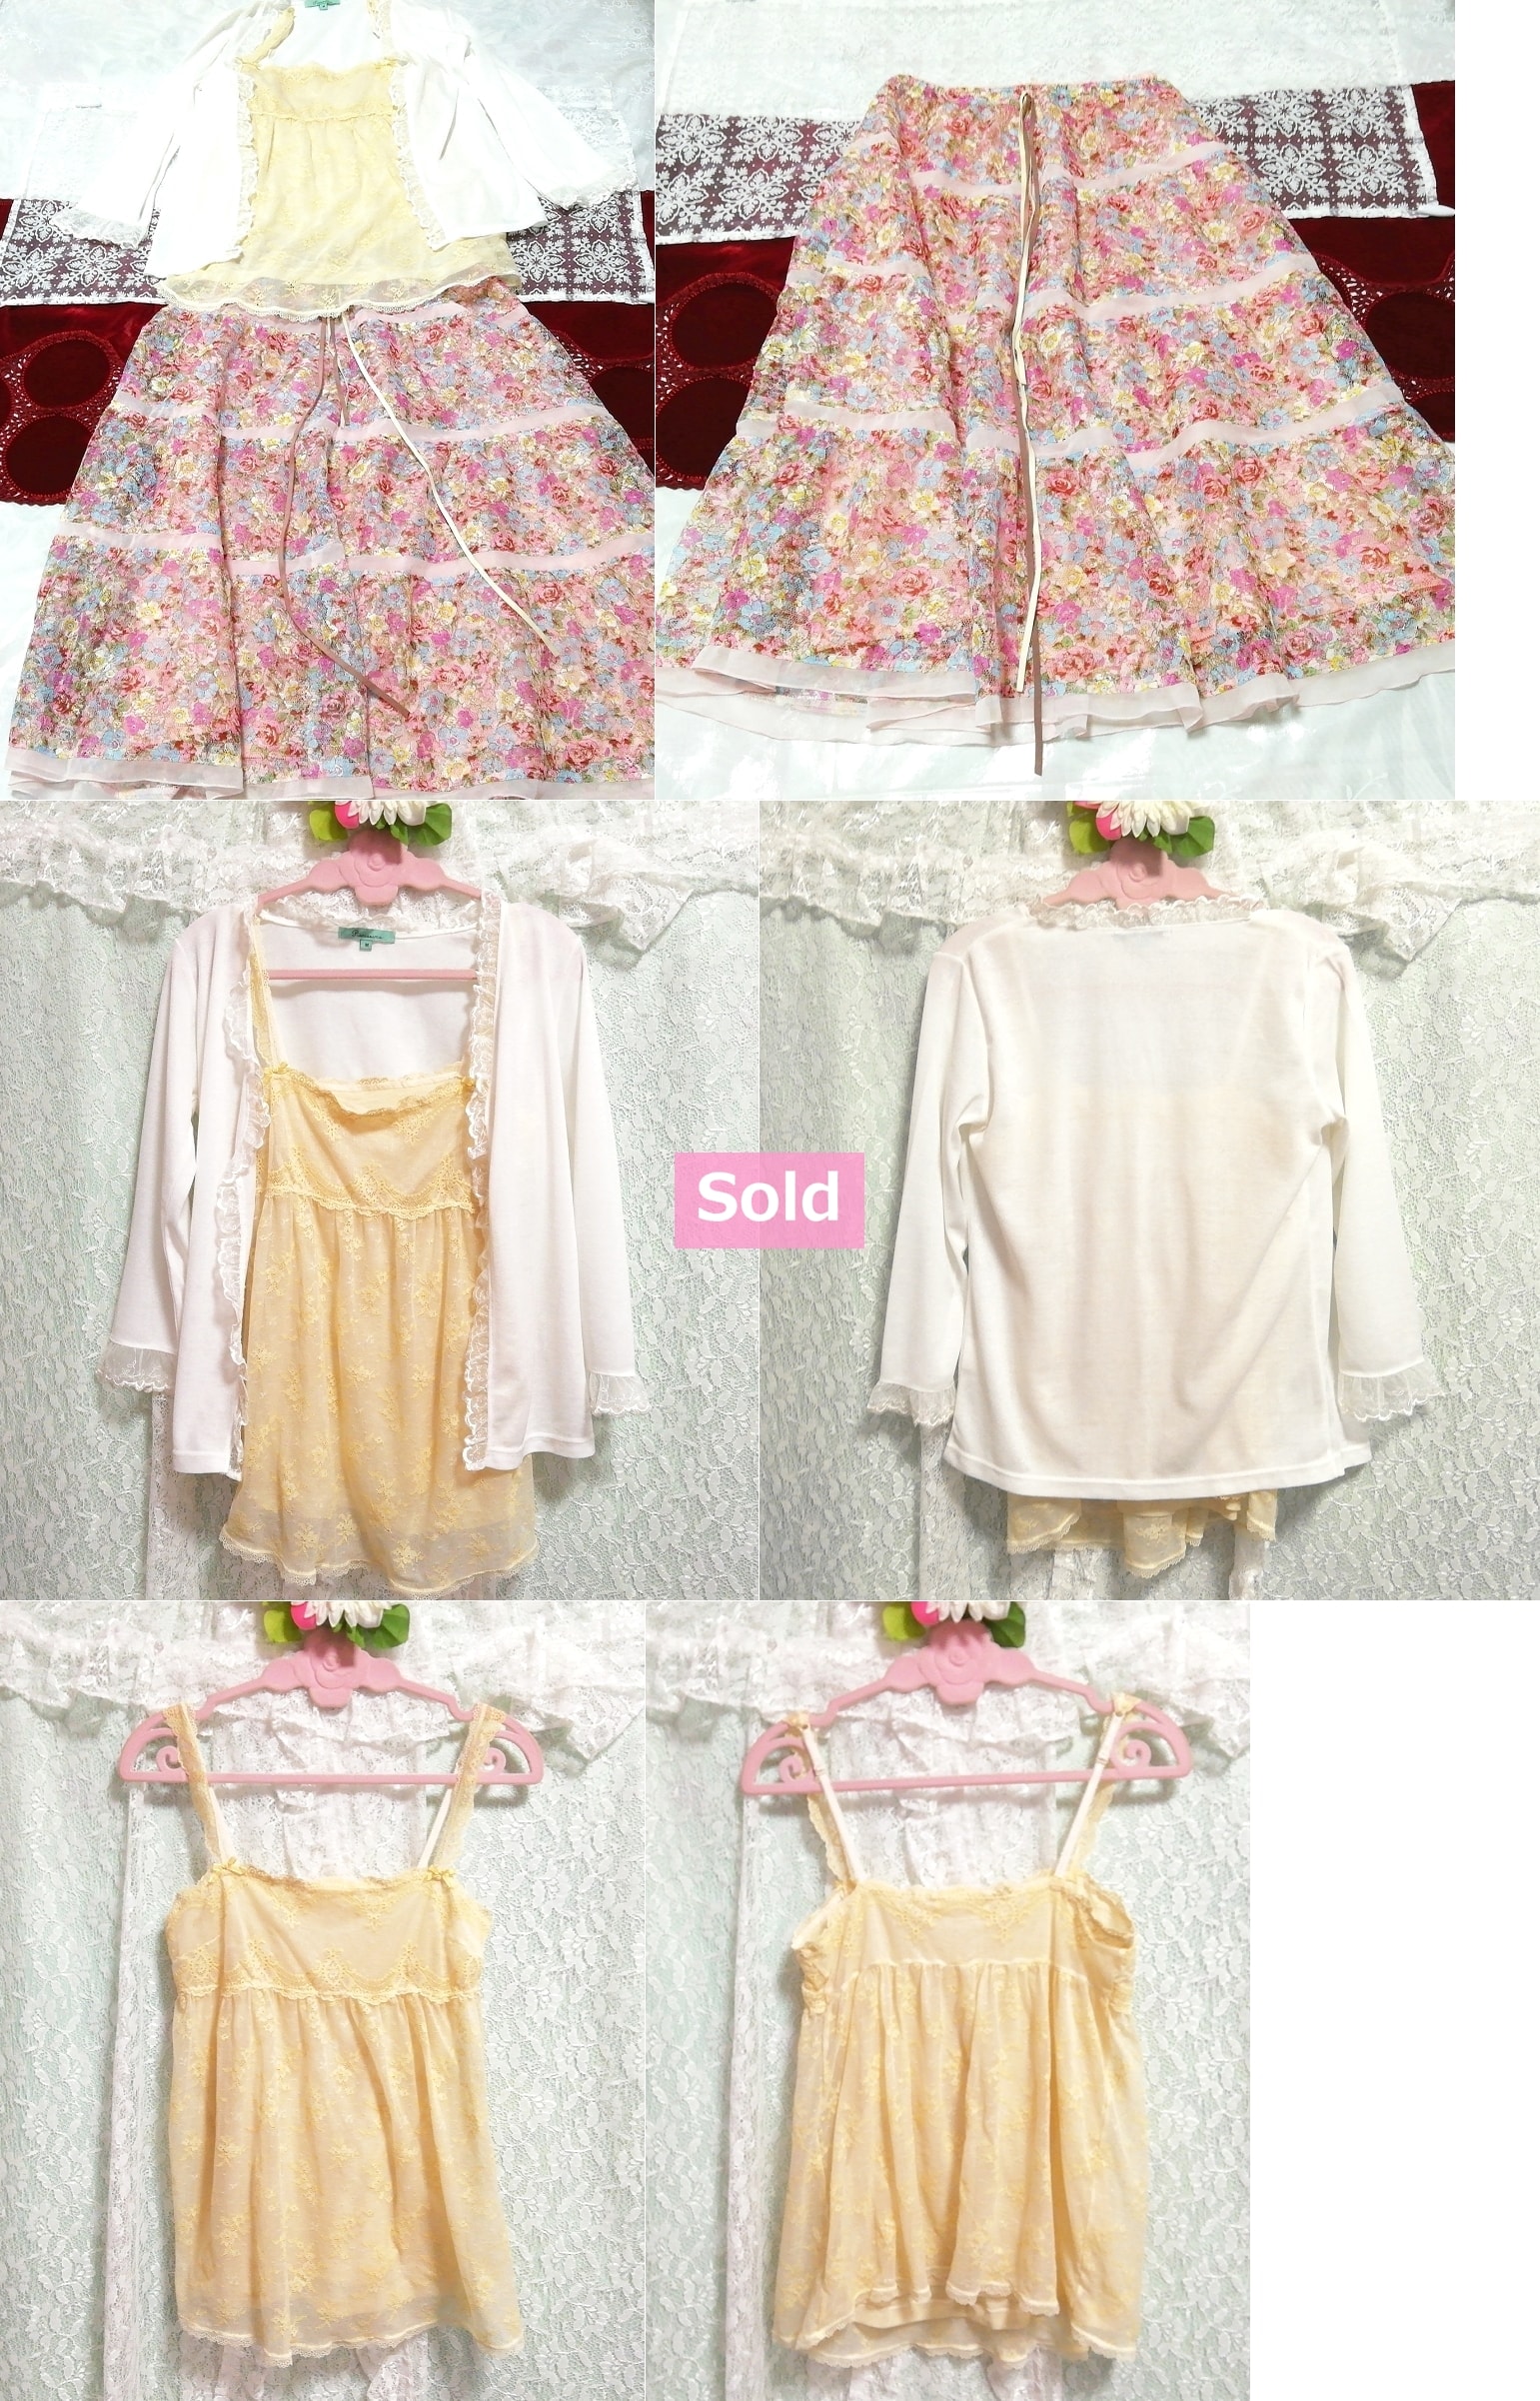 White haori gown yellow lace camisole pink lace skirt negligee nightgown, fashion, ladies' fashion, nightwear, pajamas